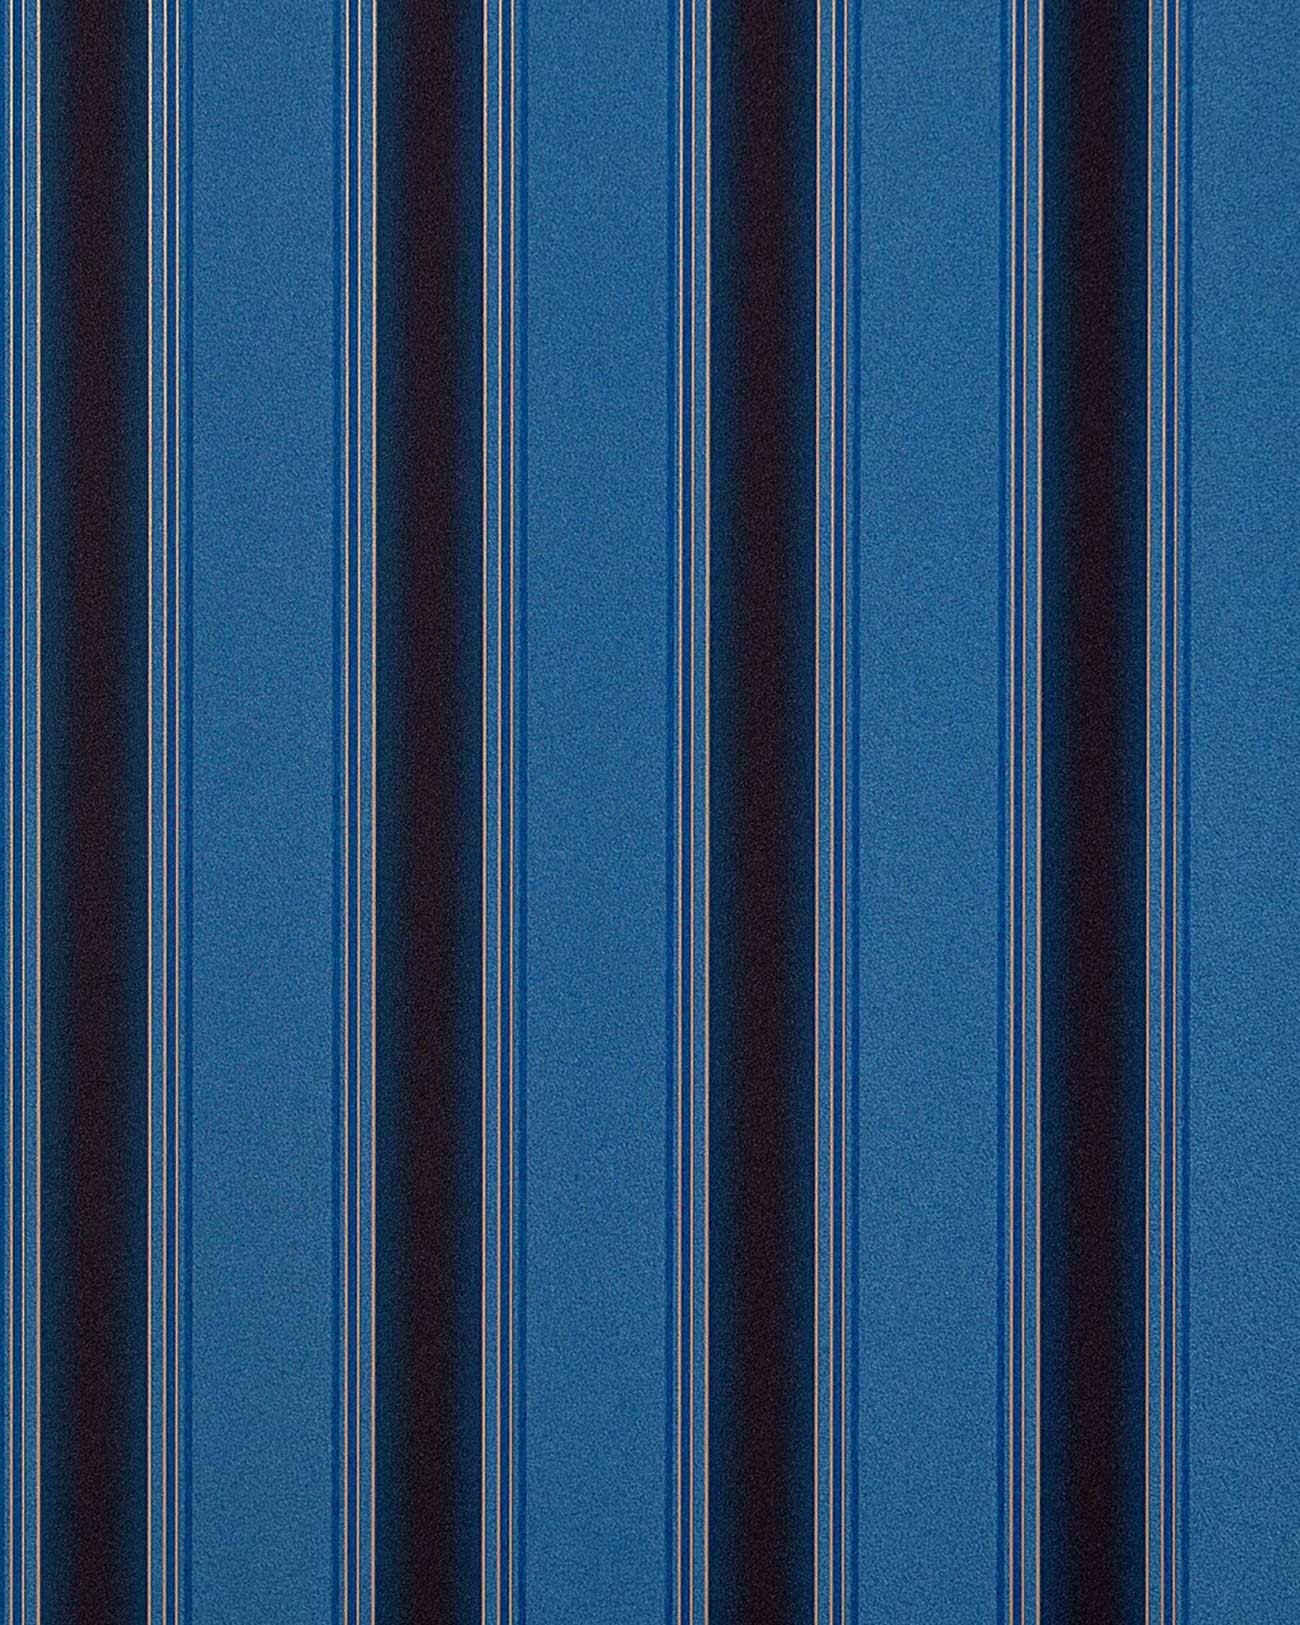 Stripe Wallpaper Wall Edem Deep Embossed Light Blue Brown